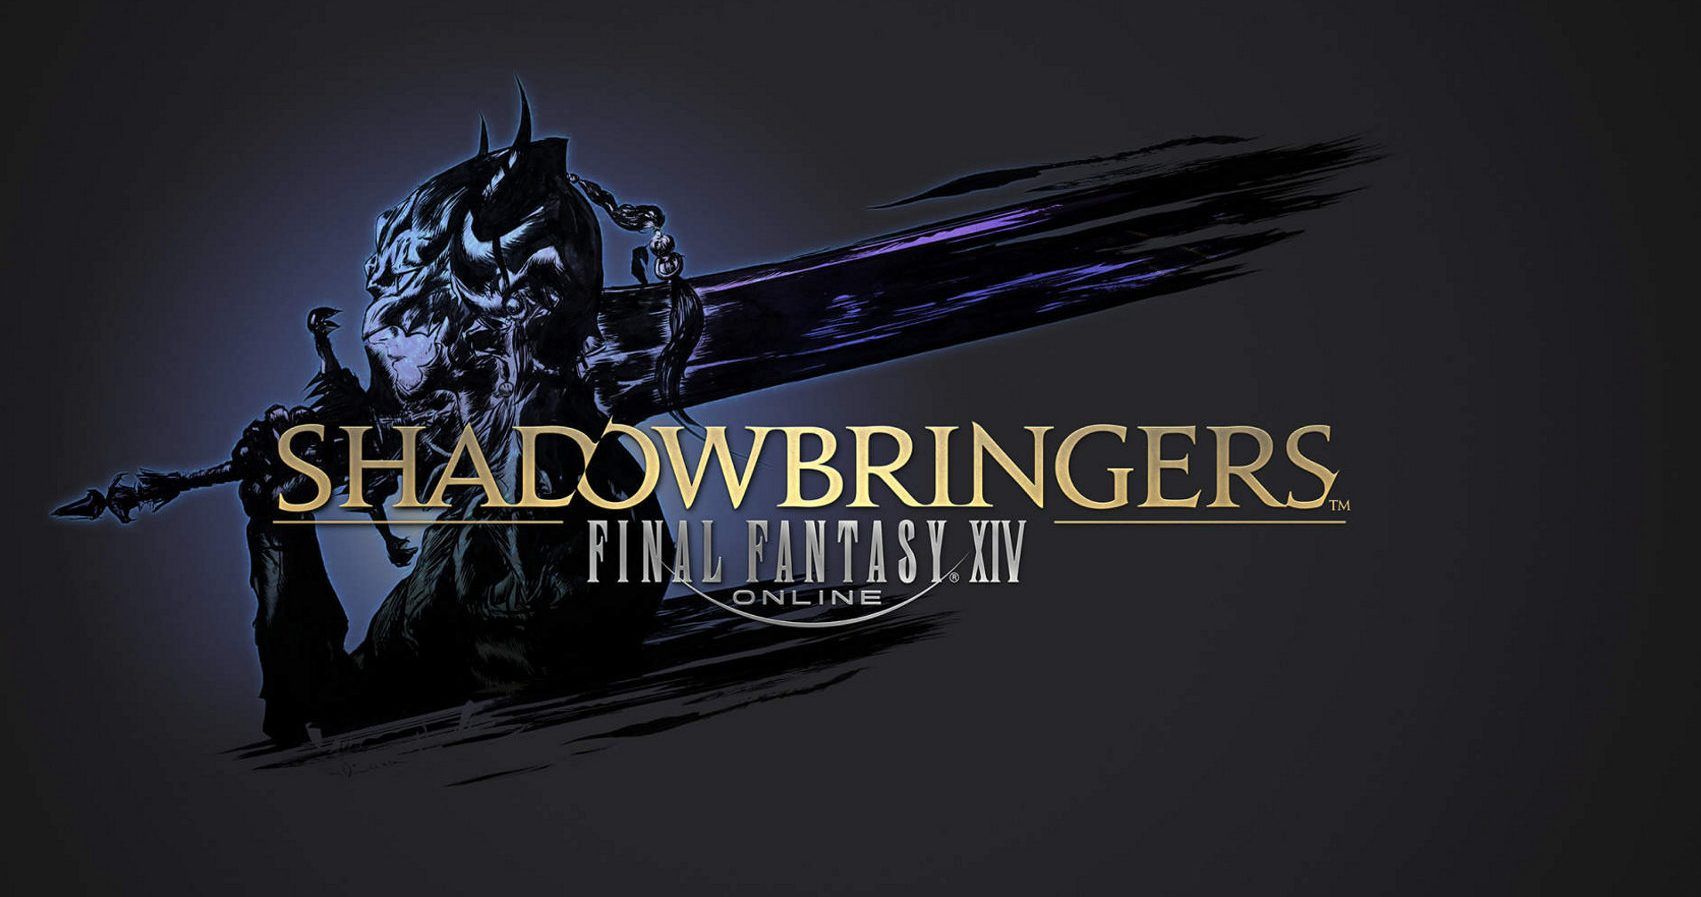 Final Fantasy XIV Should You Buy Levels To Get To Shadowbringers